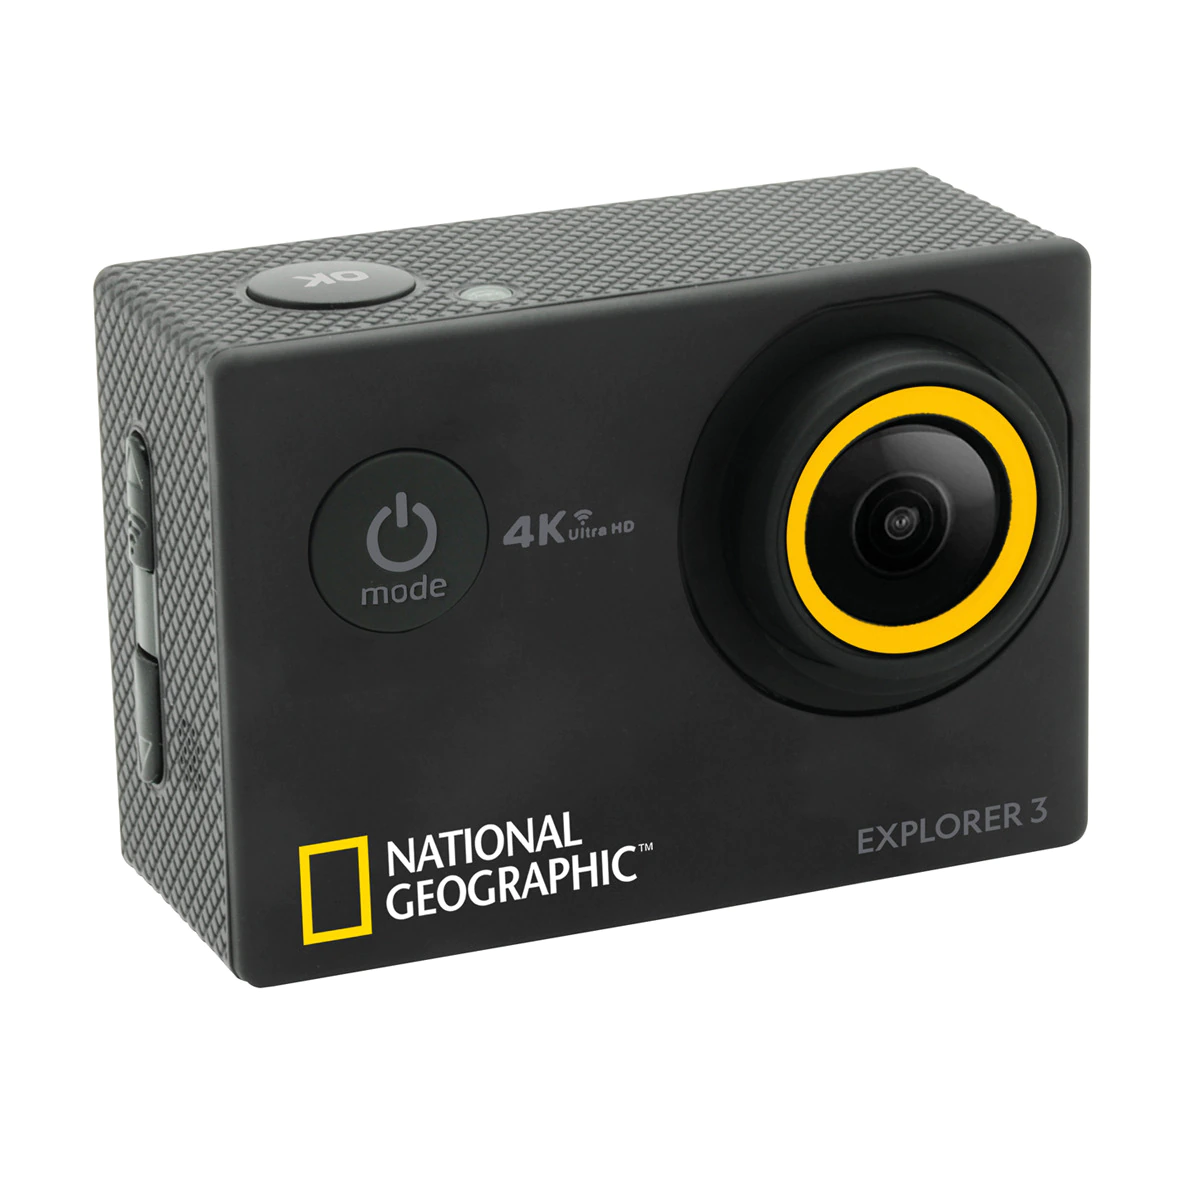 Cámara deportiva National Geographic Explorer 3 4K Wi-Fi Set con Doble Batería con función webcam